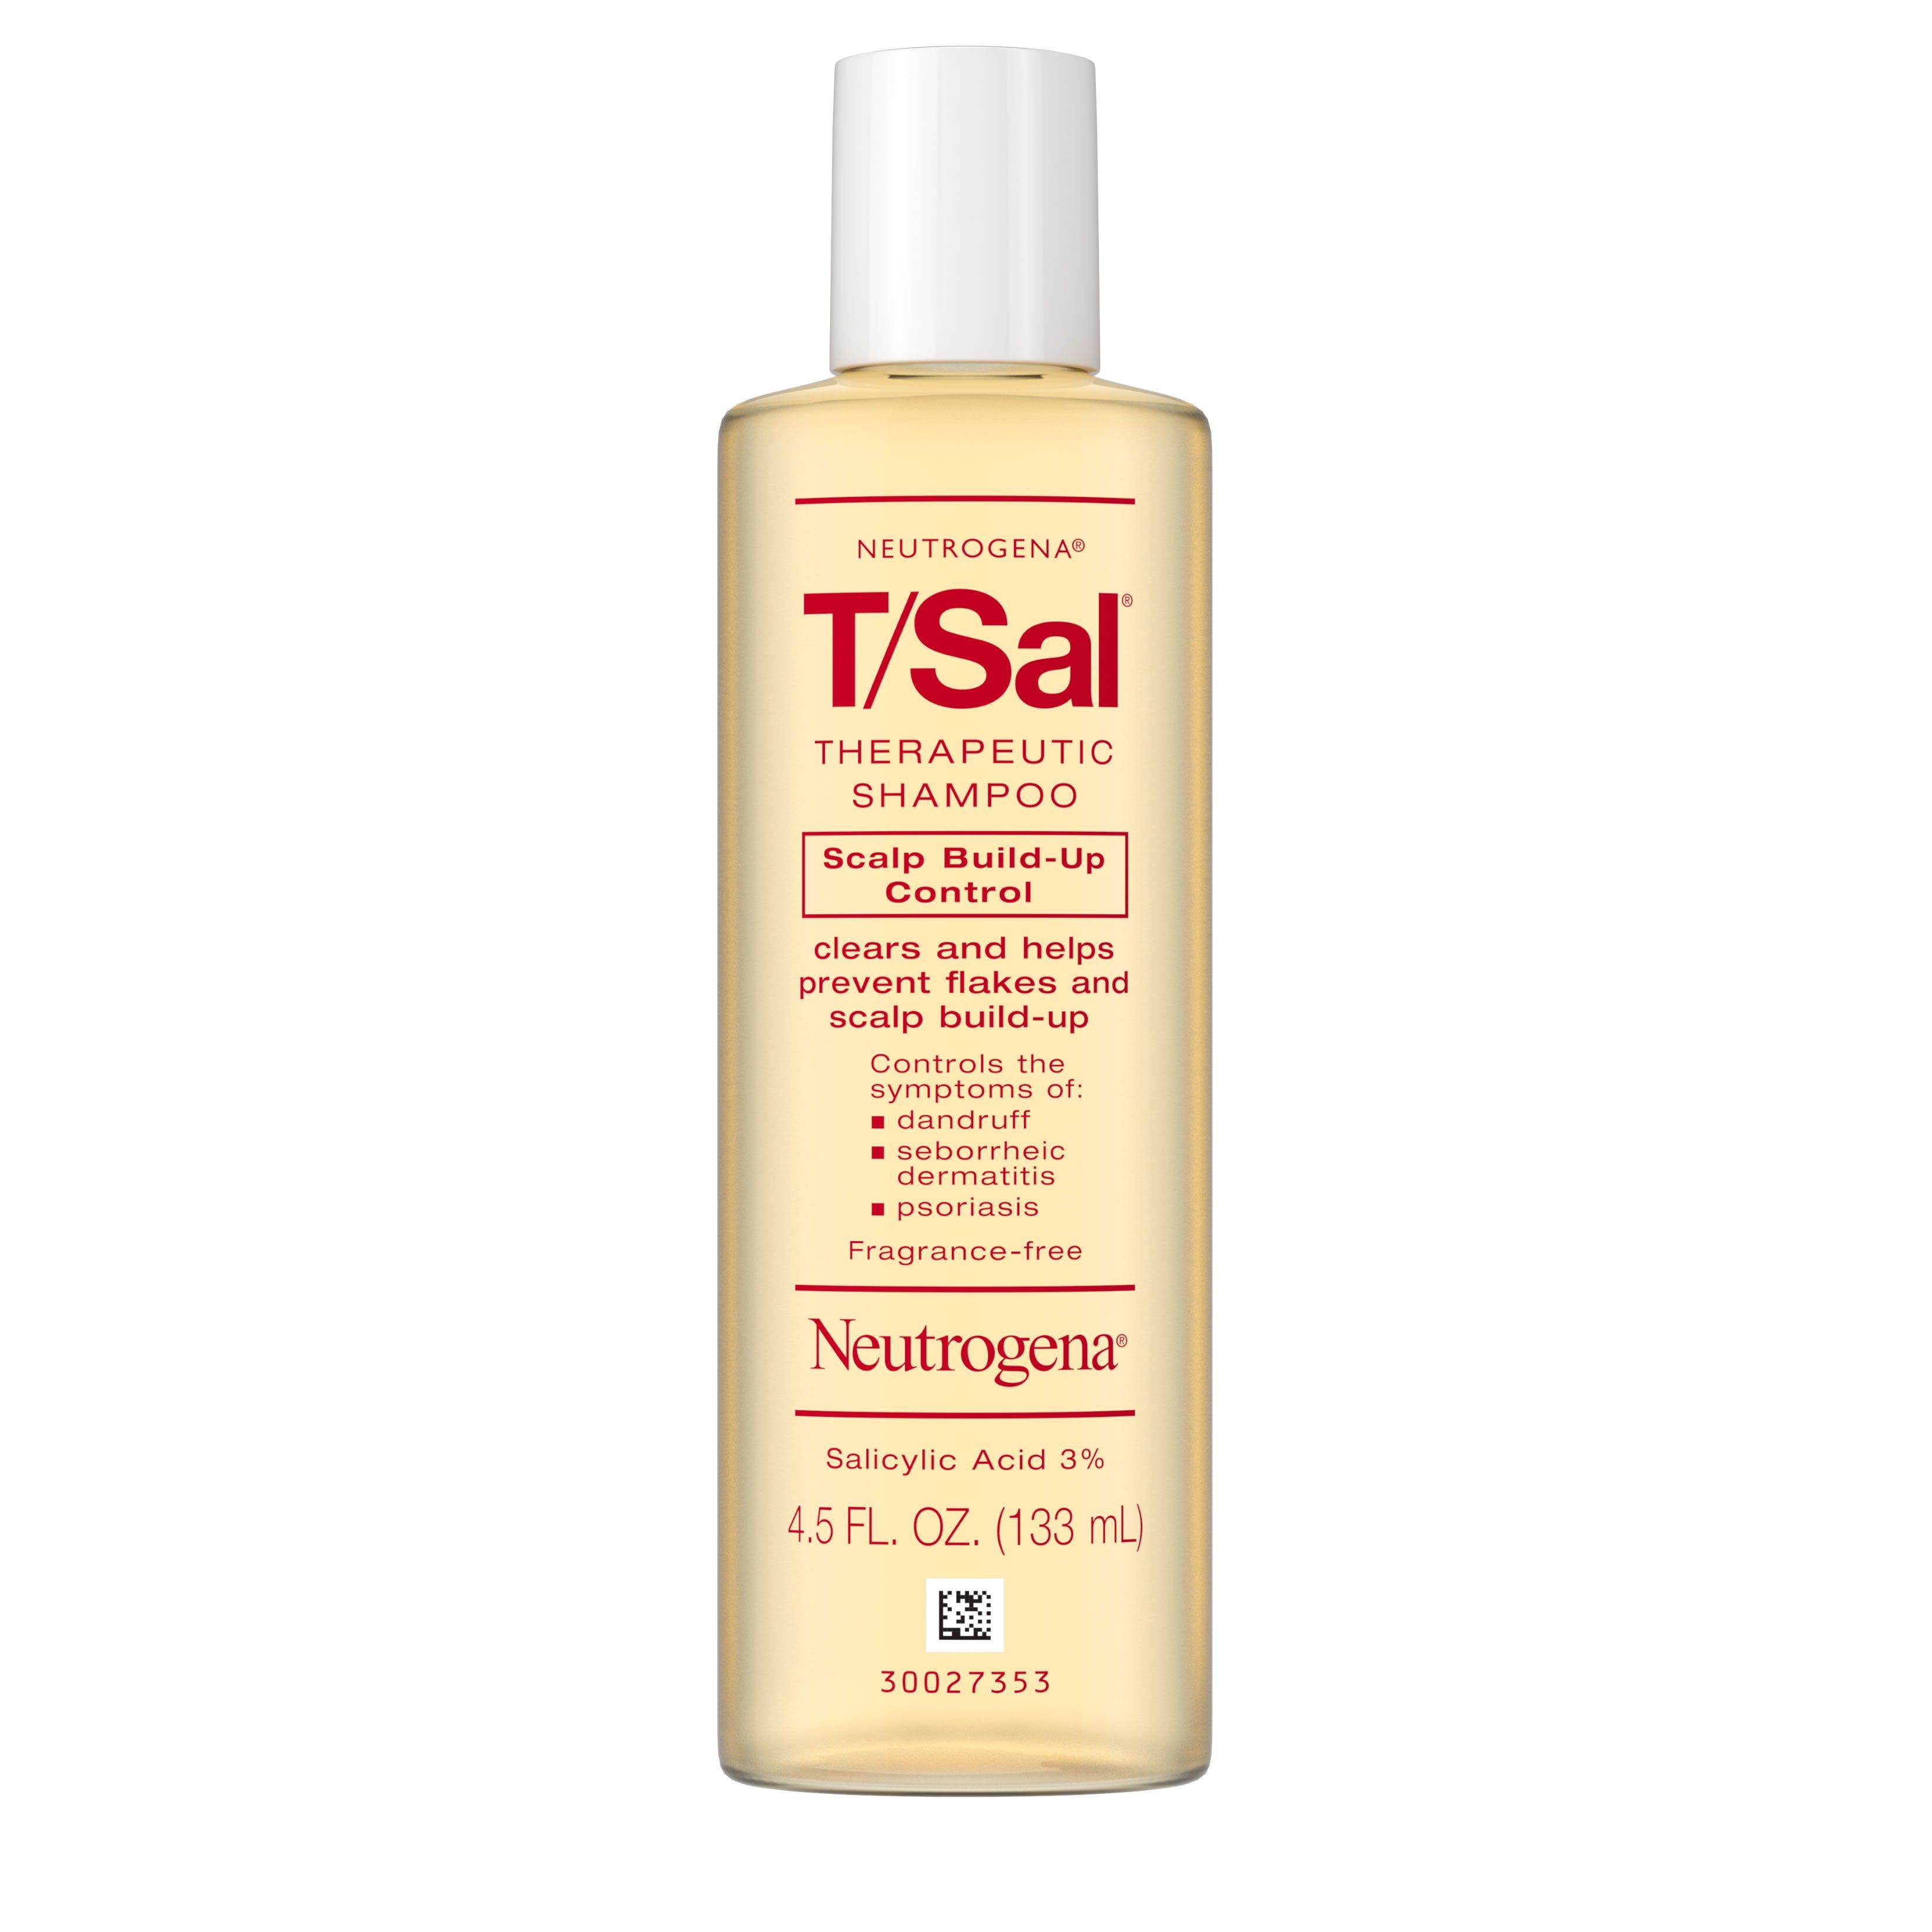 T/Sal Therapeutic Shampoo